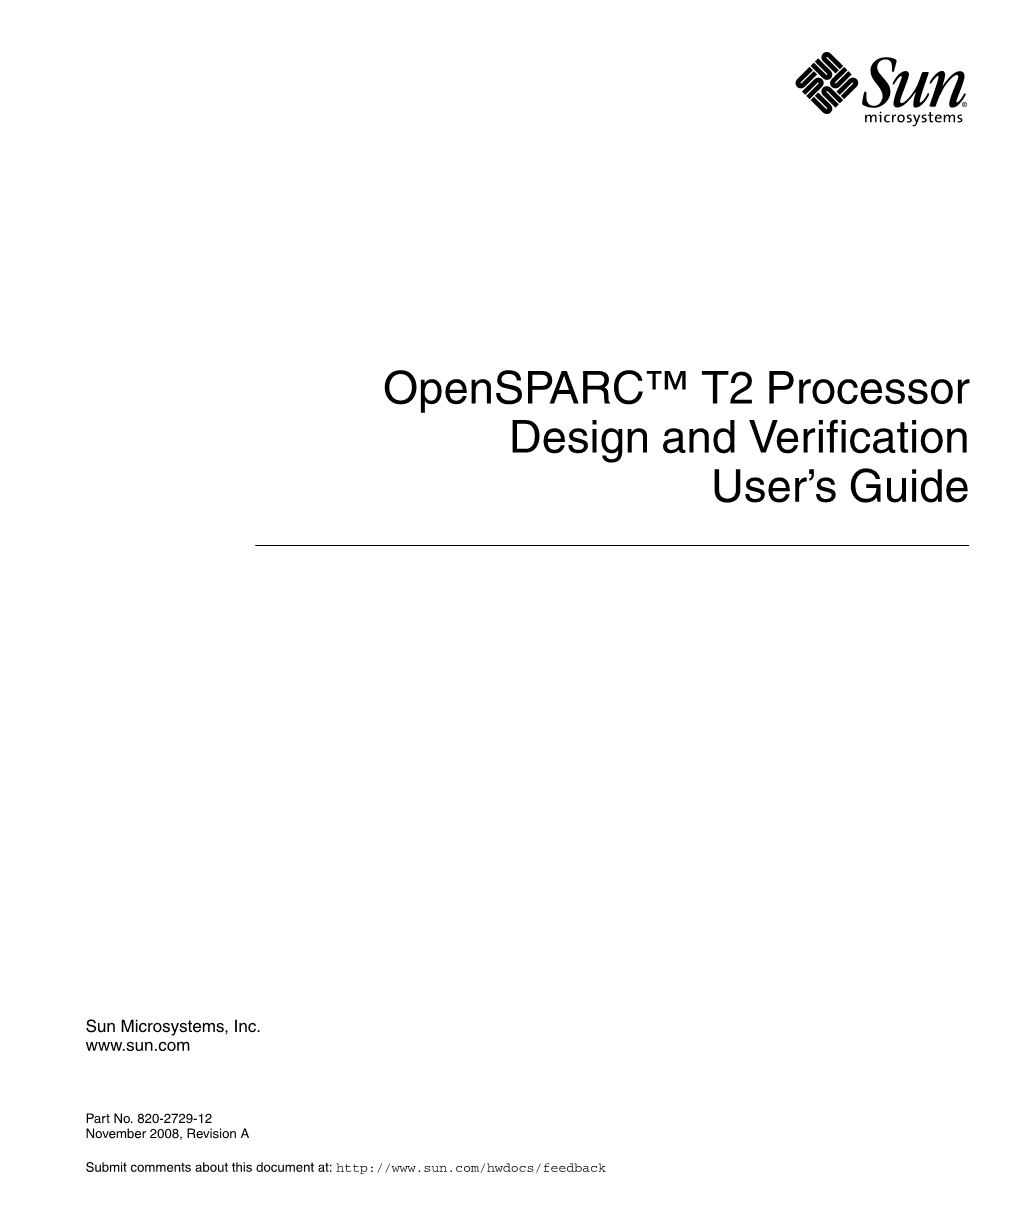 Opensparc T2 Processor Design and Verification User's Guide